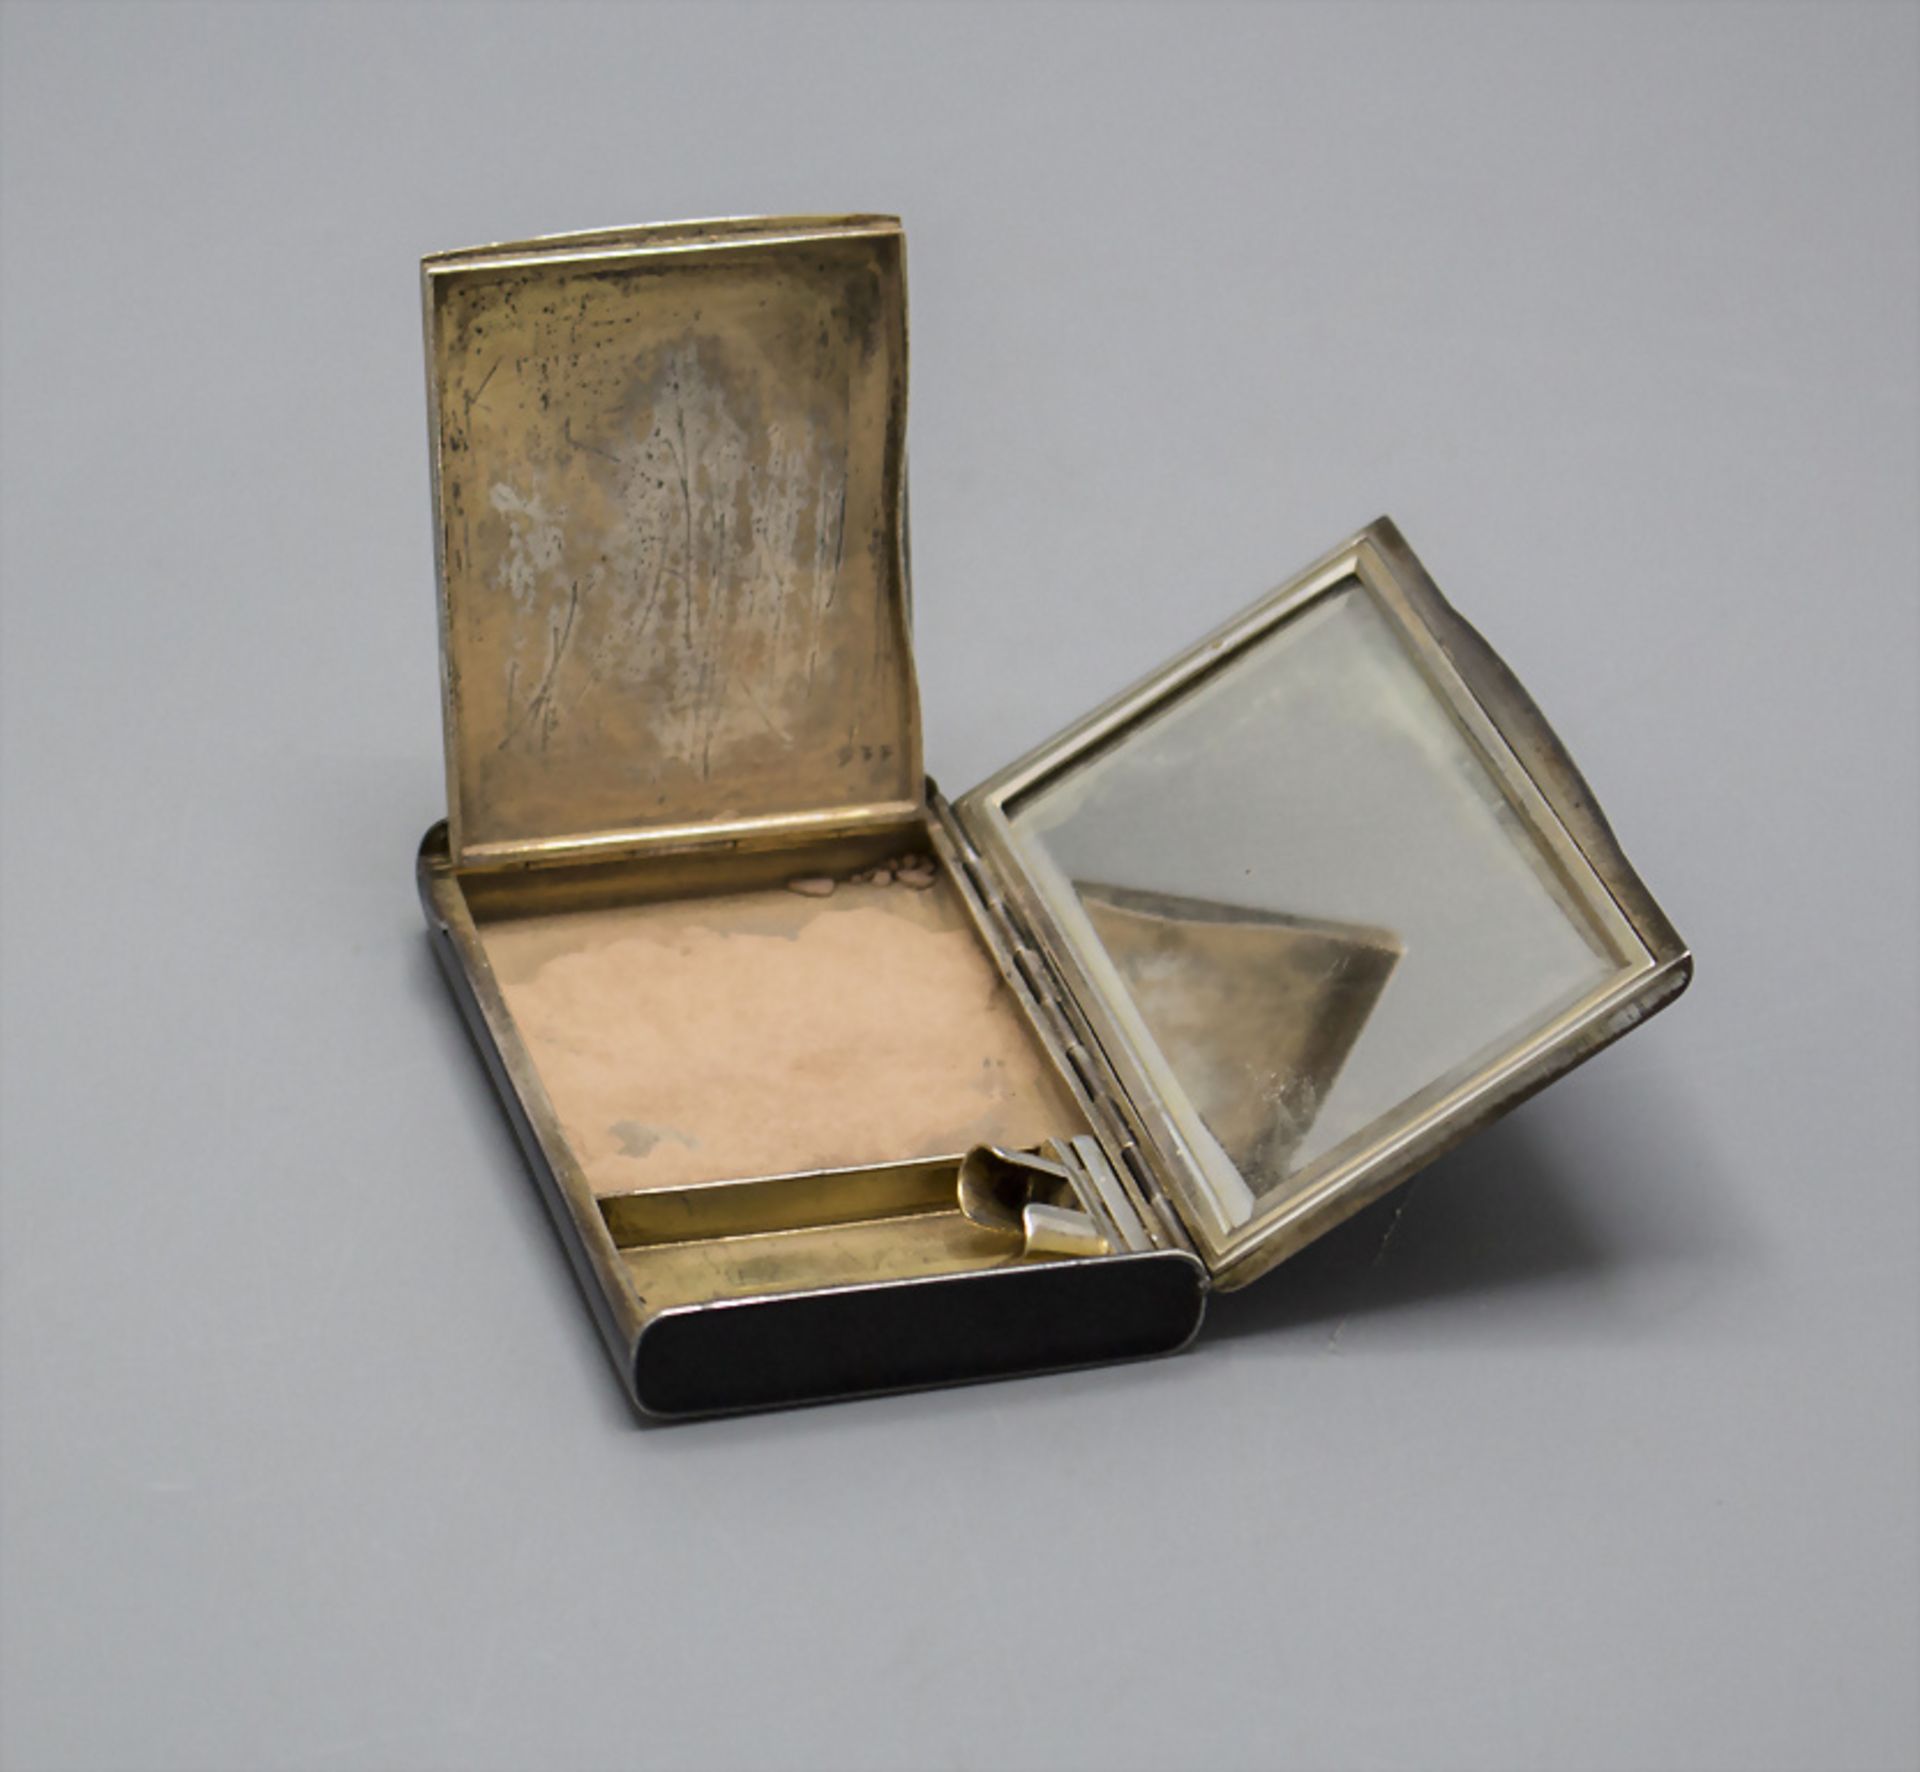 Art Déco Puderdose mit Diamanten / An Art Deco powder compact with diamonds, wohl Wien, um 1900 - Bild 3 aus 5